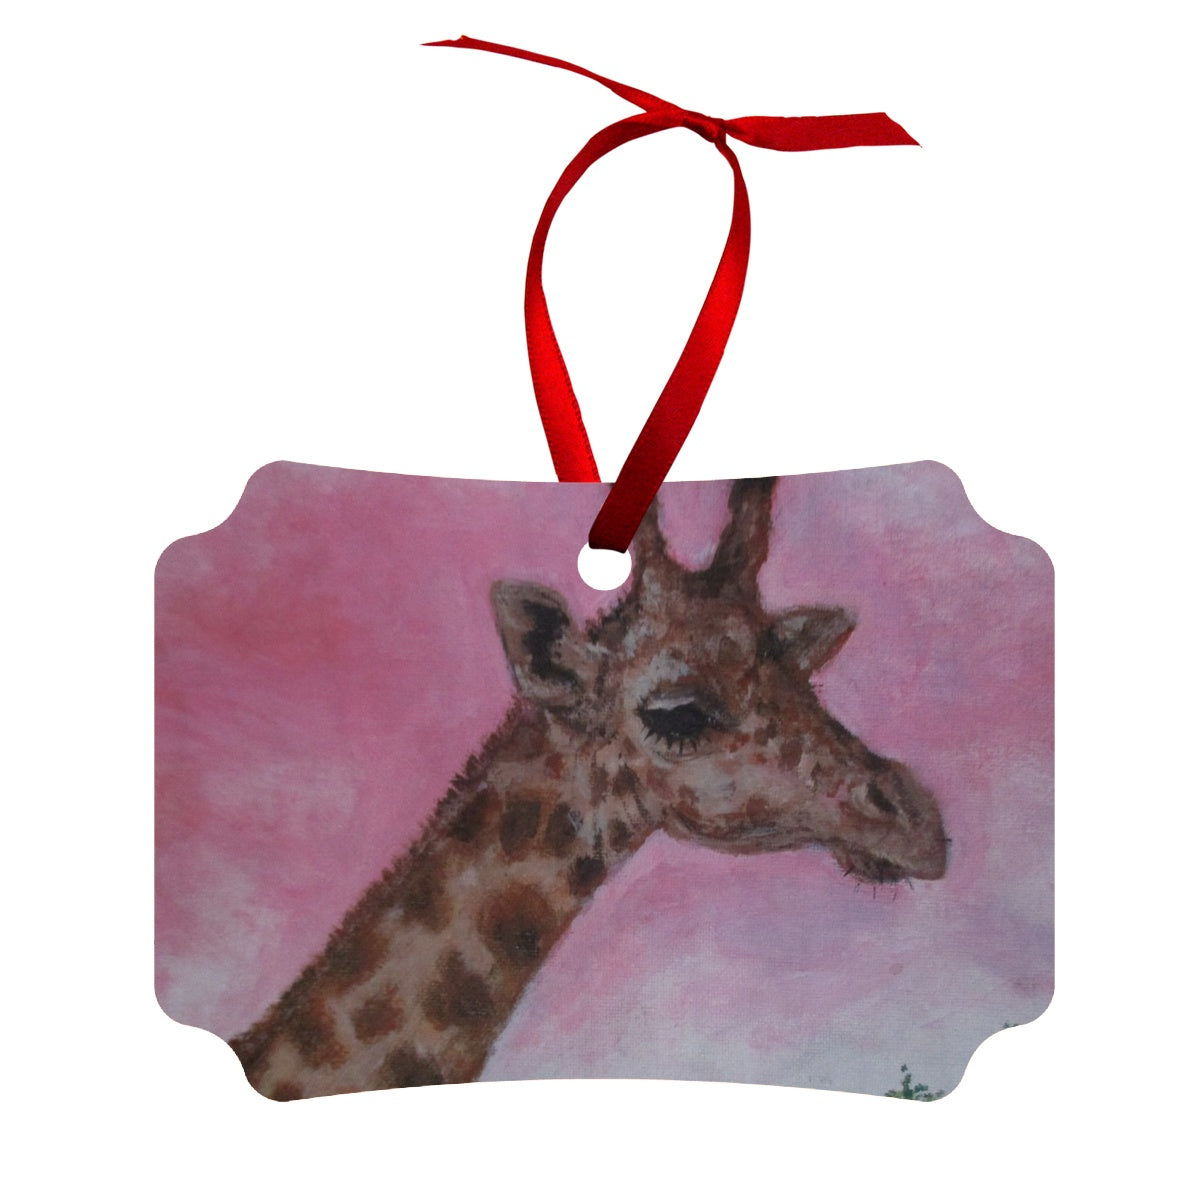 Mr. Giraffe ~ Wood Ornament